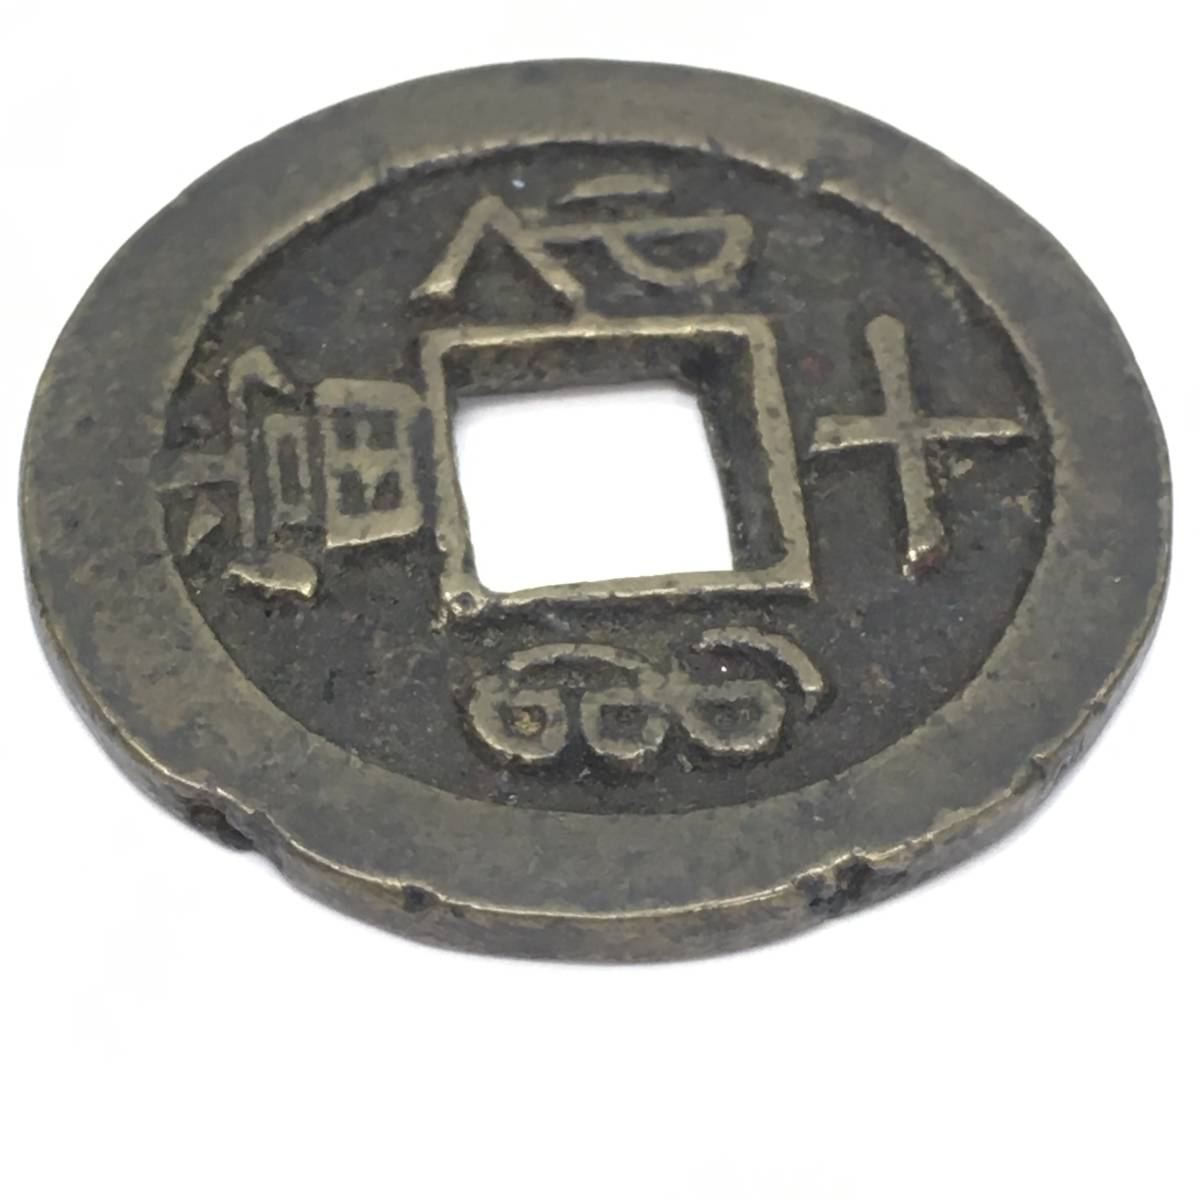 C11-154 咸豐重寶 中国 古銭 / 咸豊重寶 重宝 穴銭 / コイン 貨幣 硬貨 